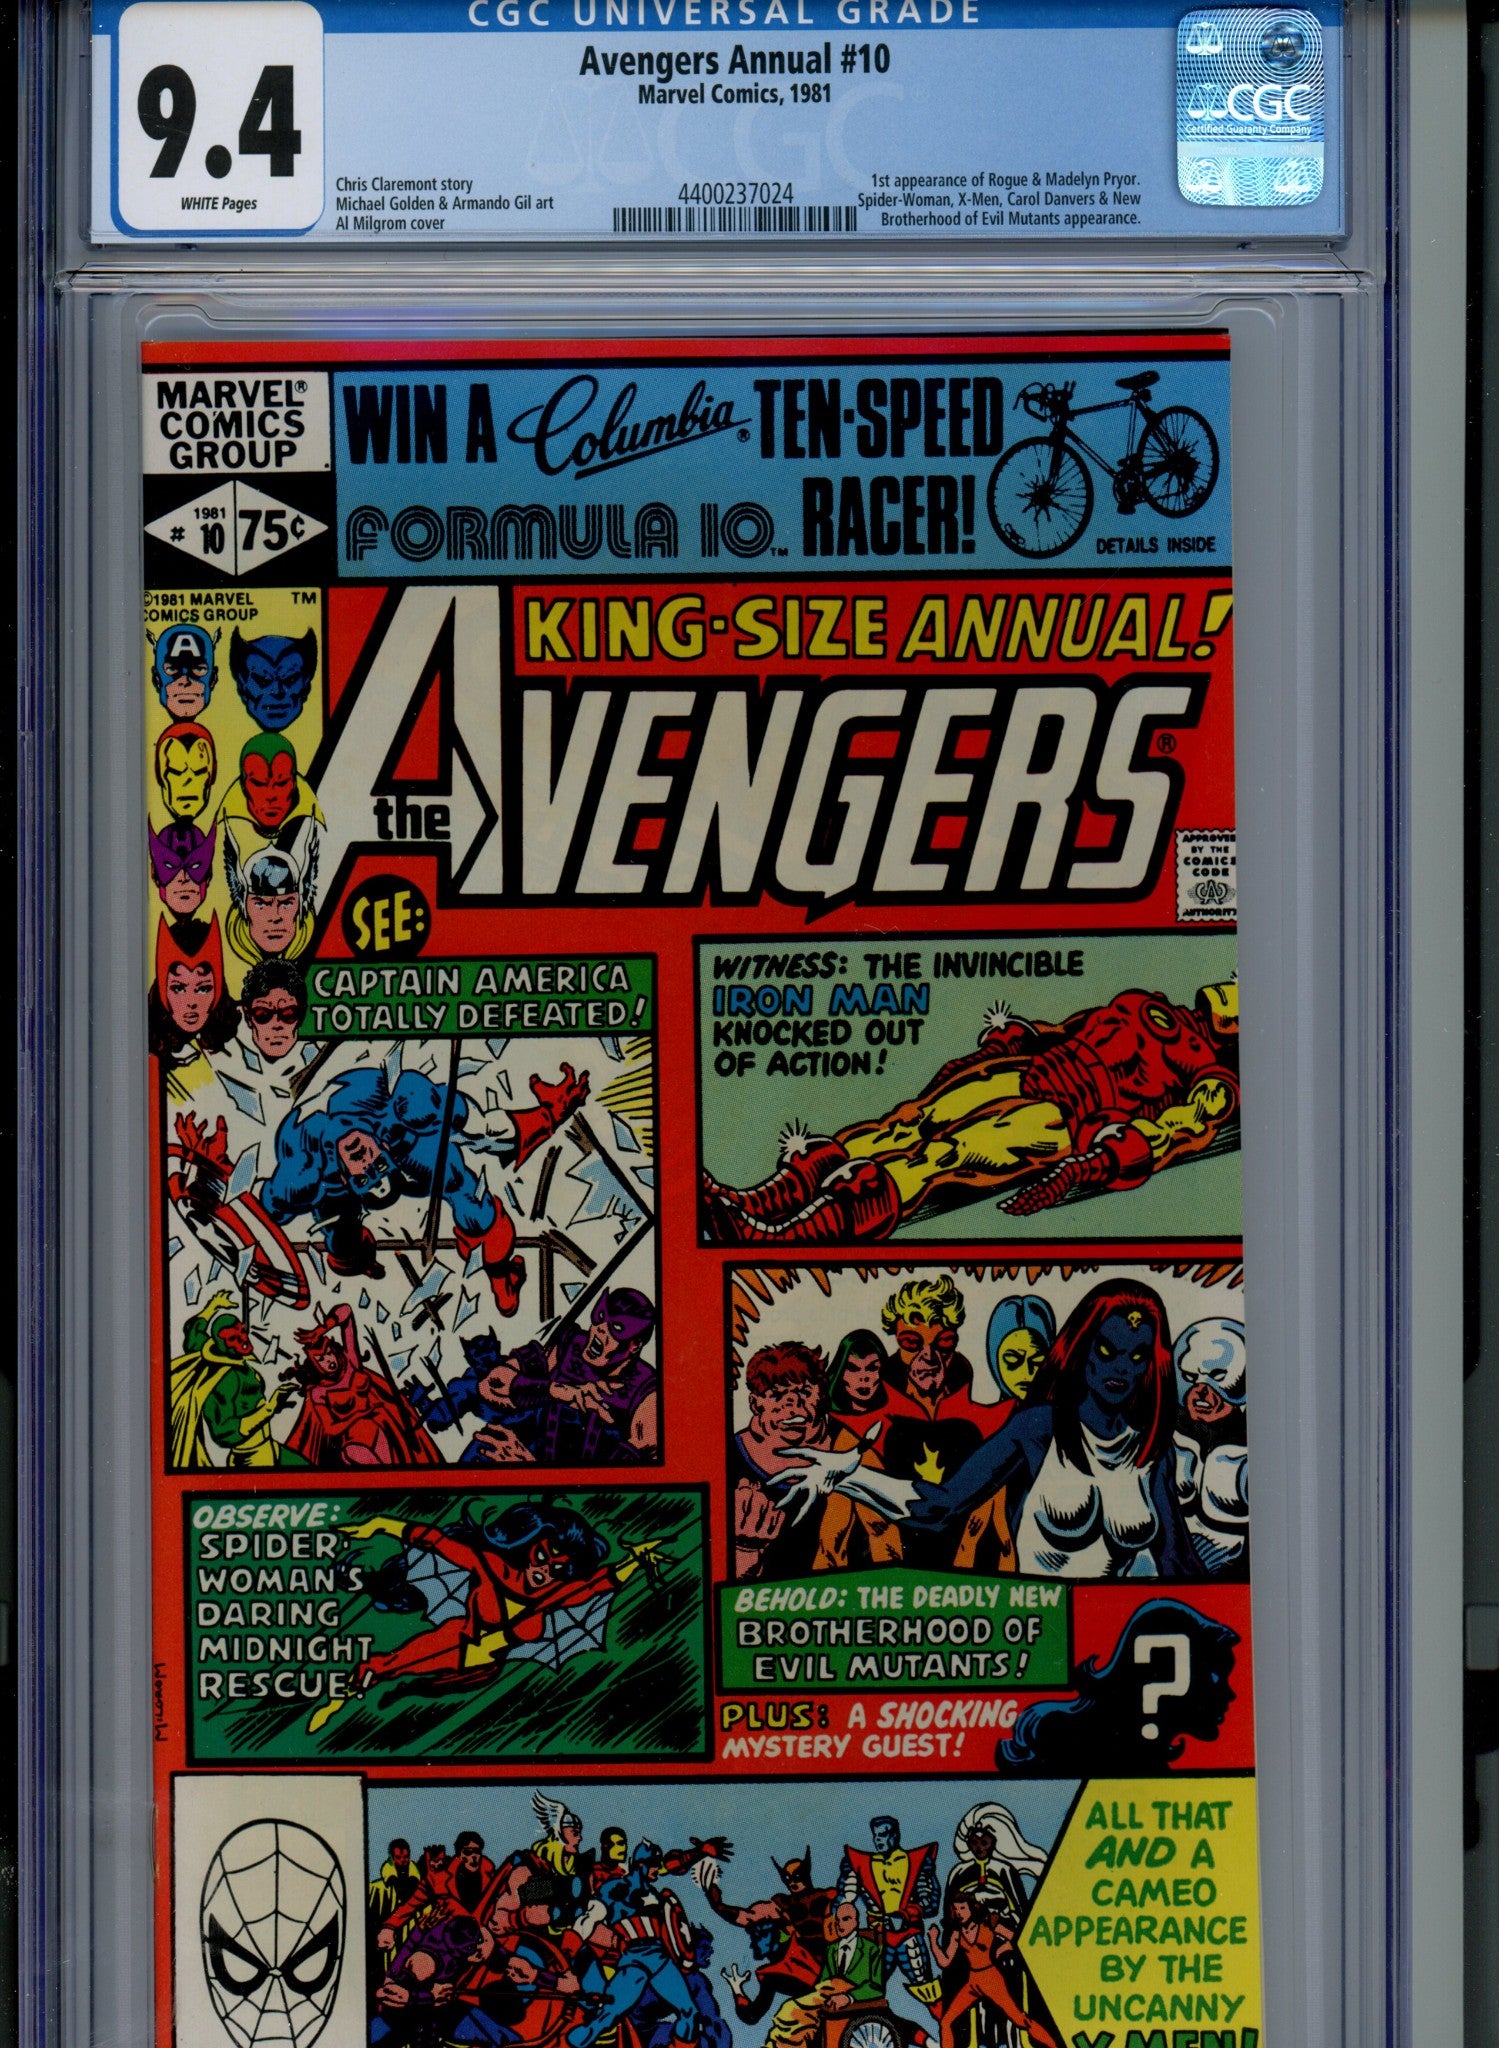 The Avengers Annual Vol 1 10 CGC 9.4 (NM) (1981) 